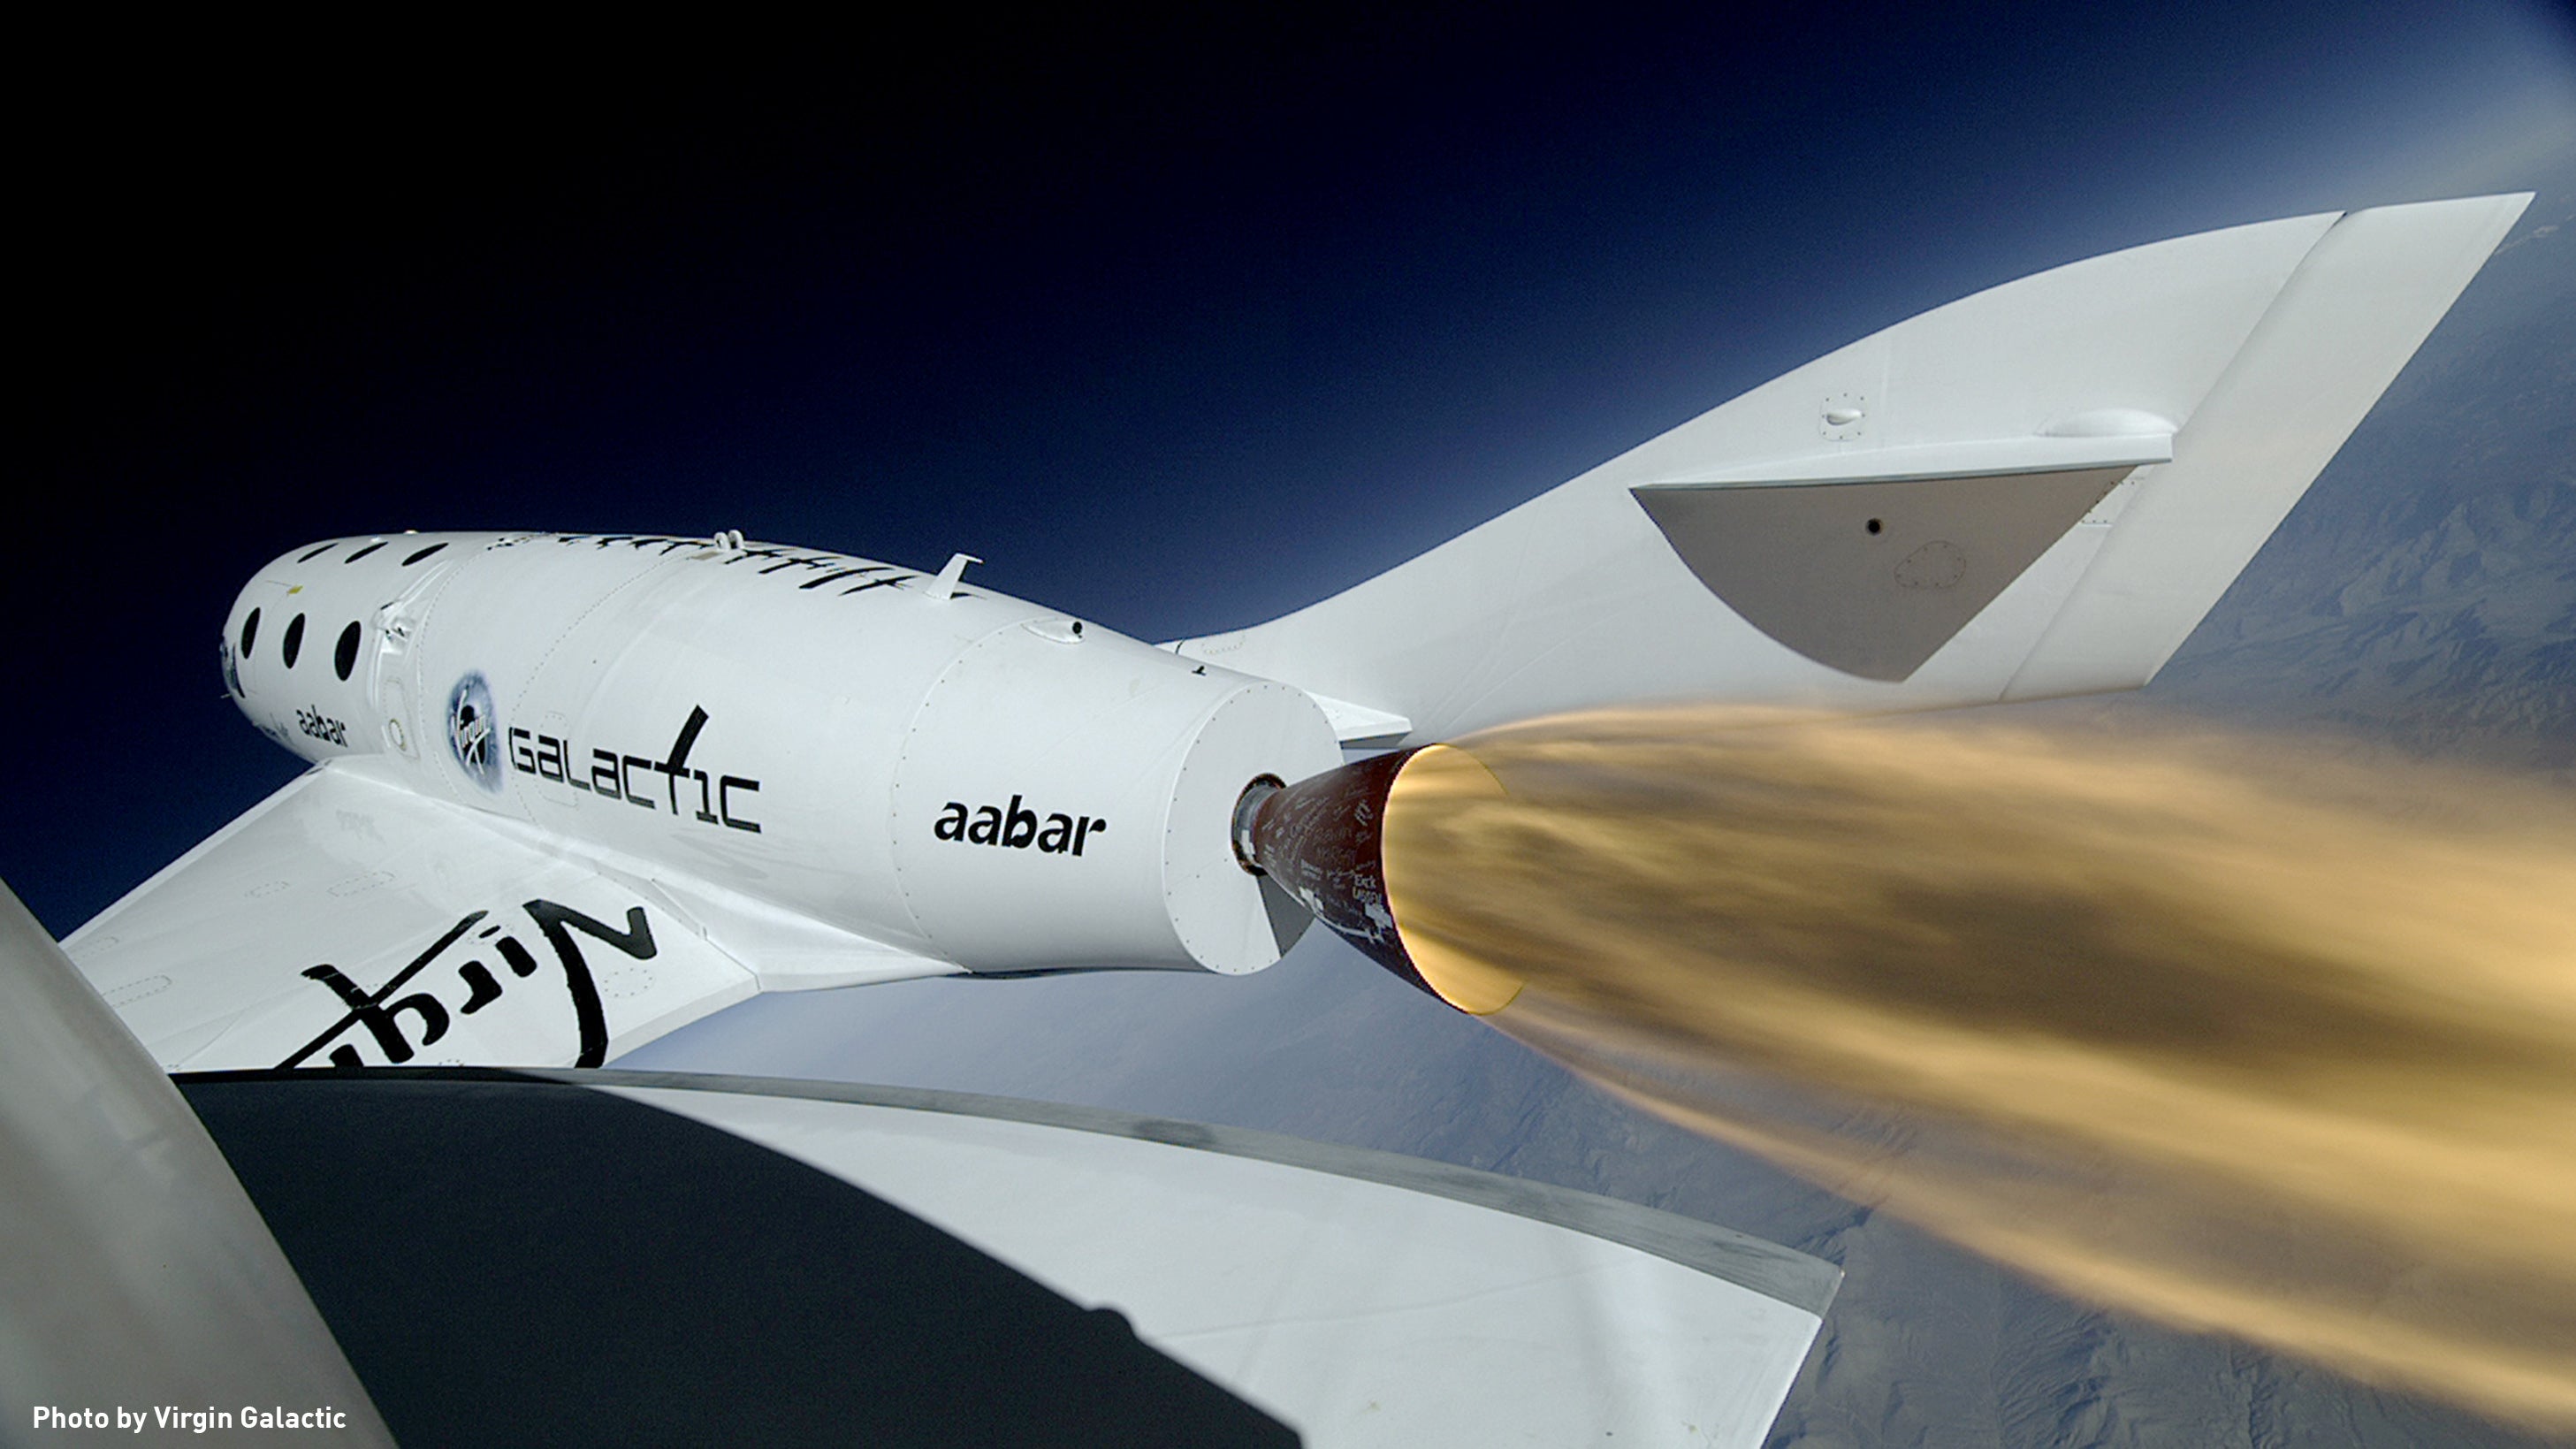 The Virgin Spaceship Enterprise is seen breaking the speed of sound in April 2013.